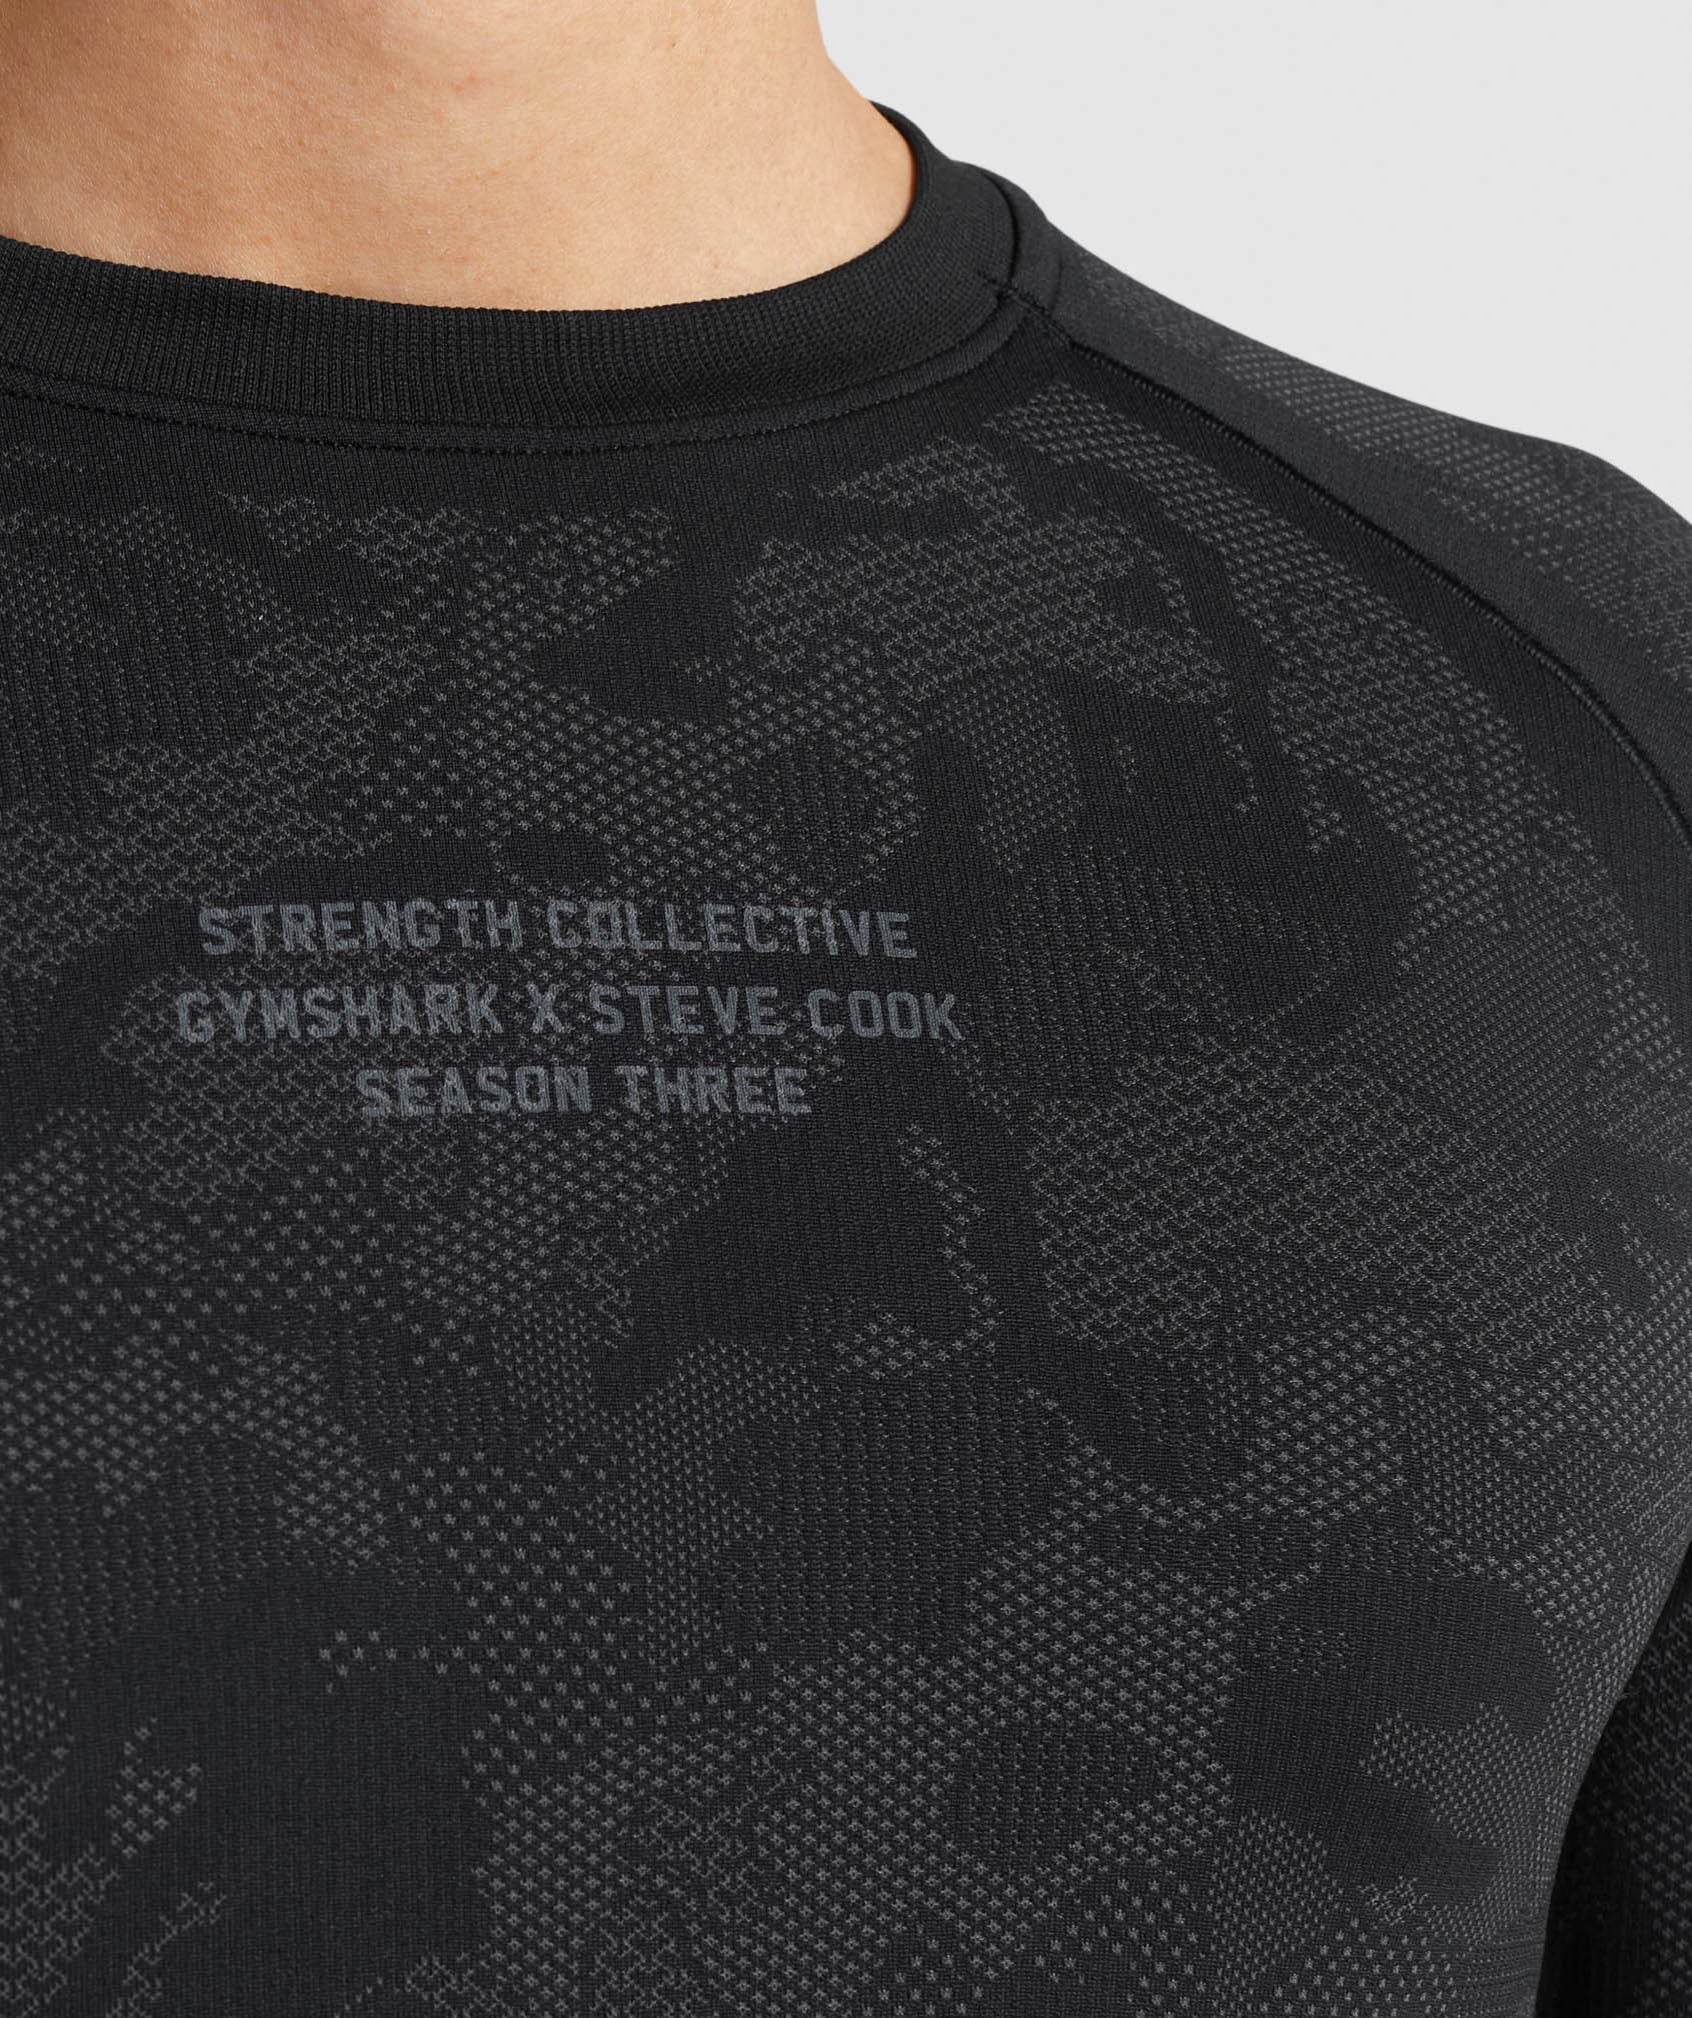 Gymshark//Steve Cook Long Sleeve Seamless T-Shirt in Black/Graphite Grey - view 6